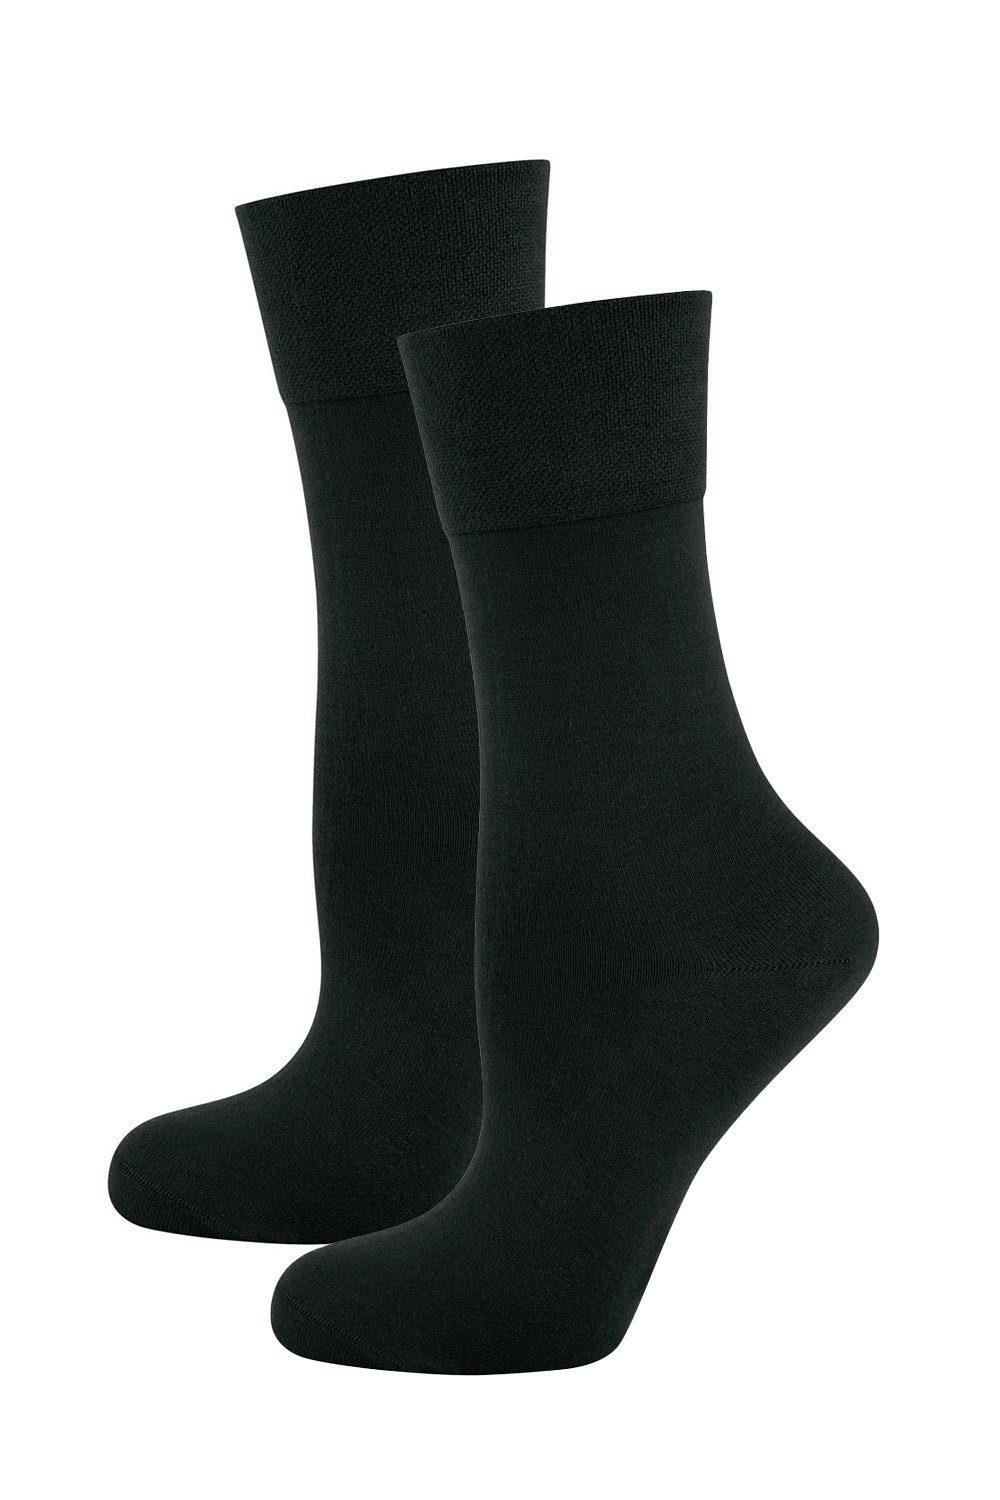 Elbeo Socken Bio Baumwolle Sensitive Socken, 2er-Pack 951303 (2er-Pack) schwarz